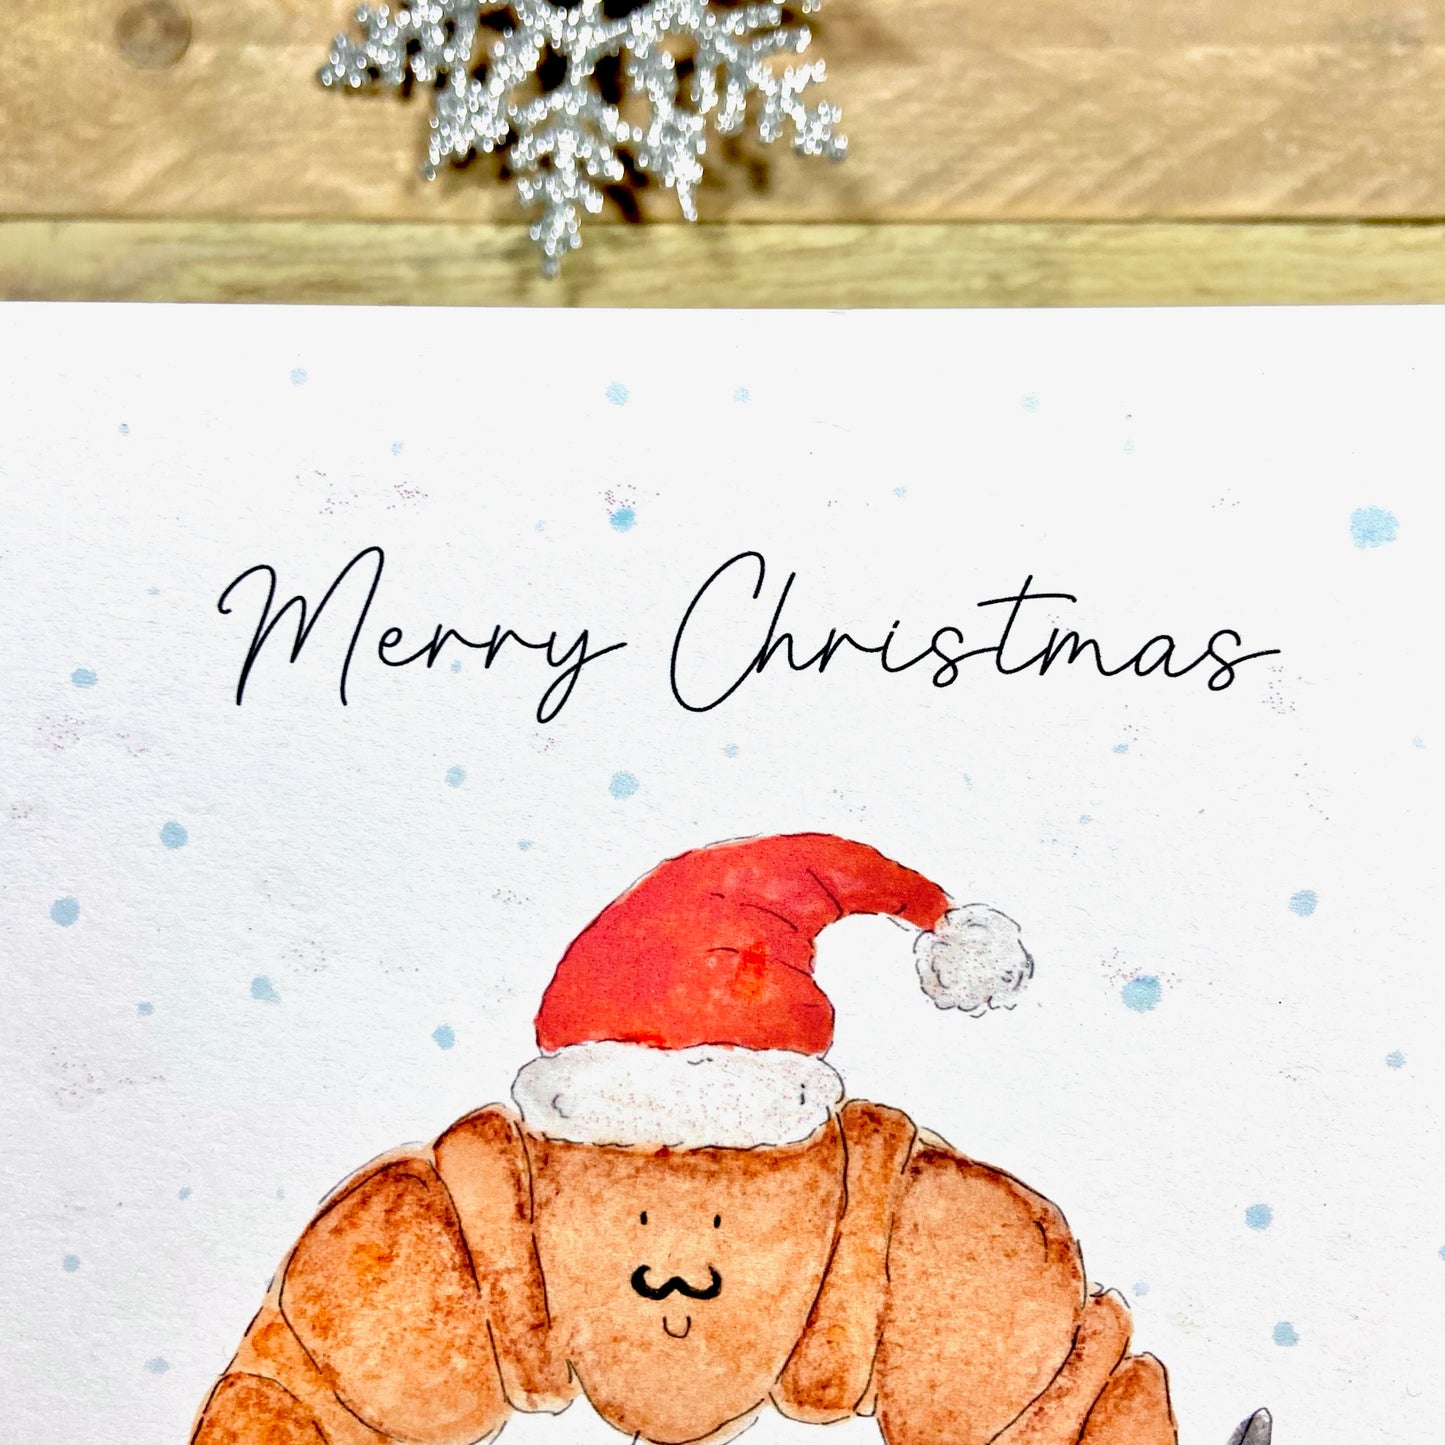 Joyeux Noel Croissant Christmas Card